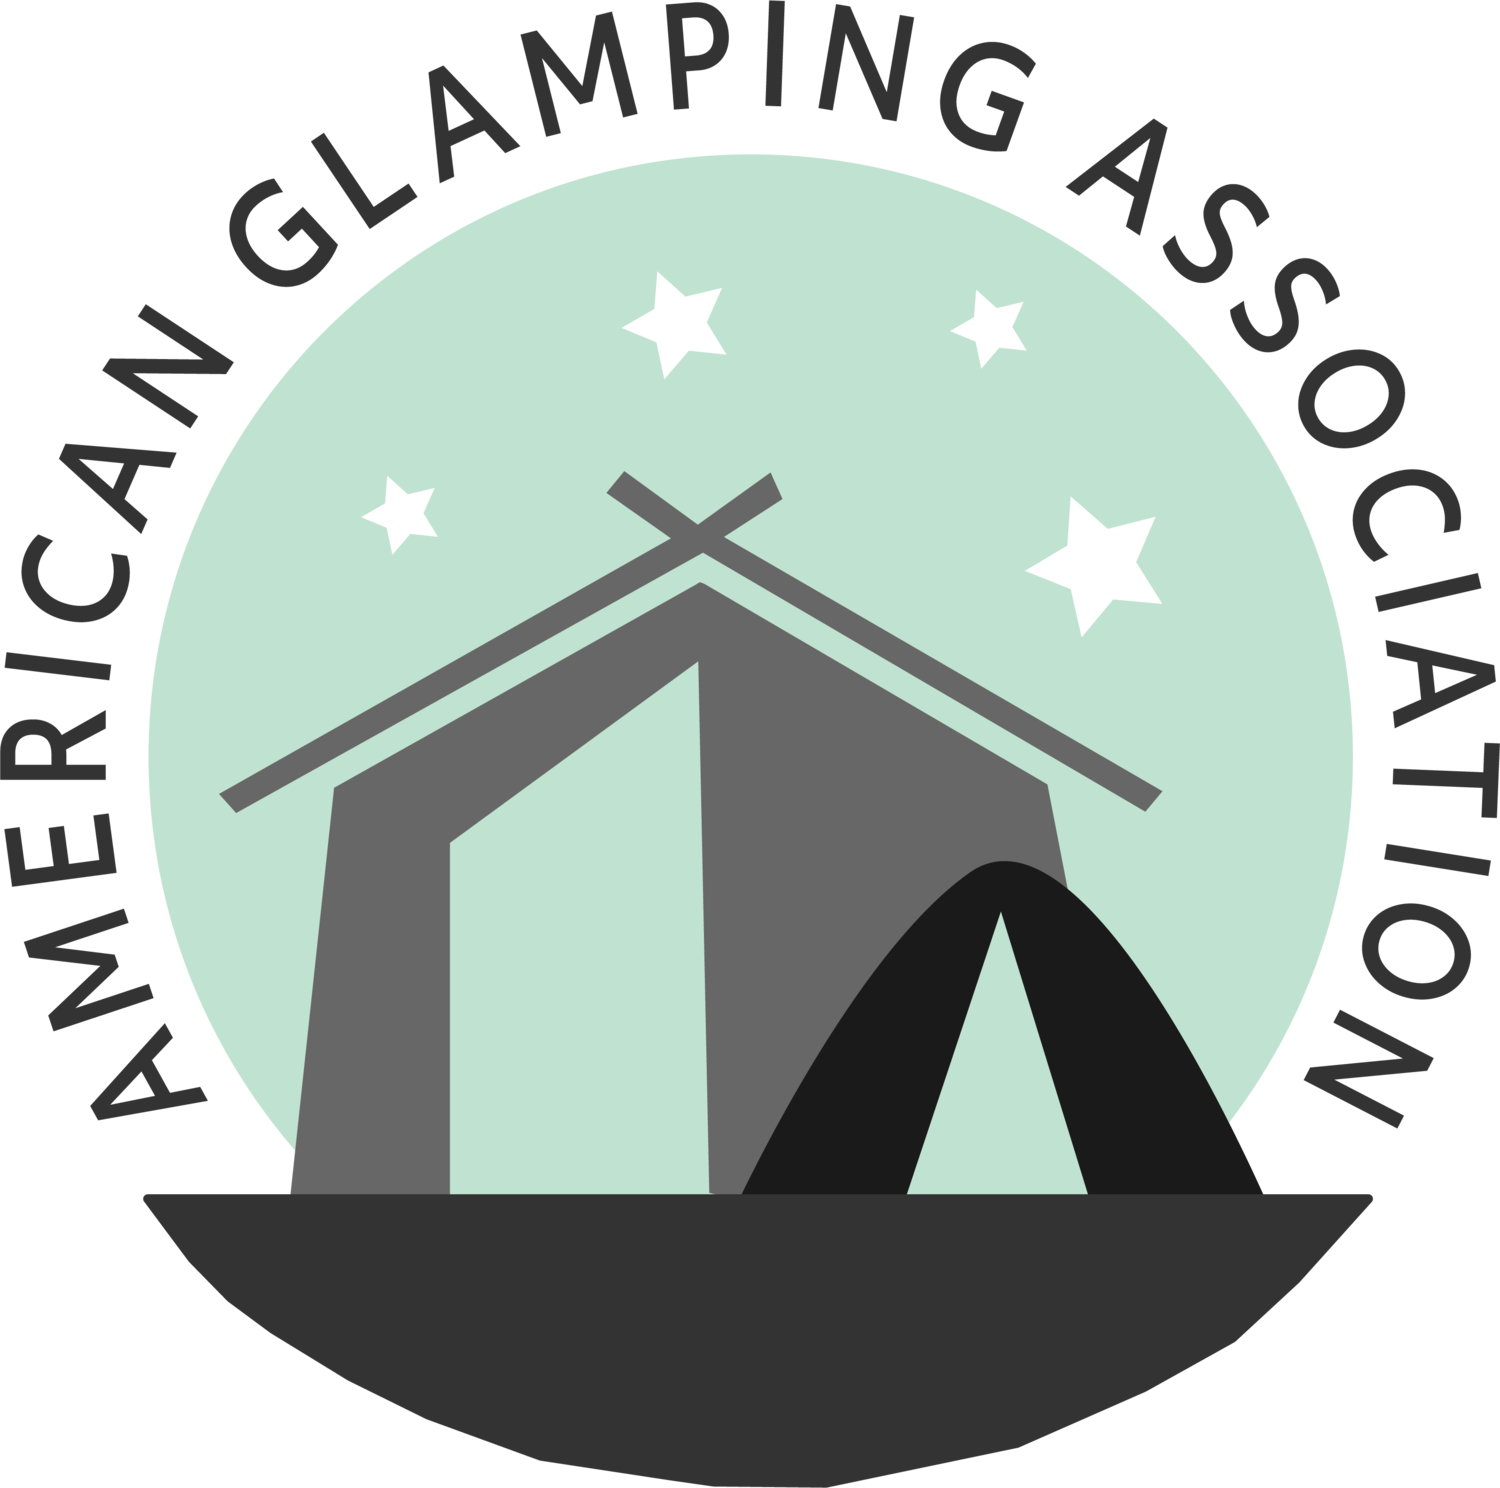 American Glamping Association